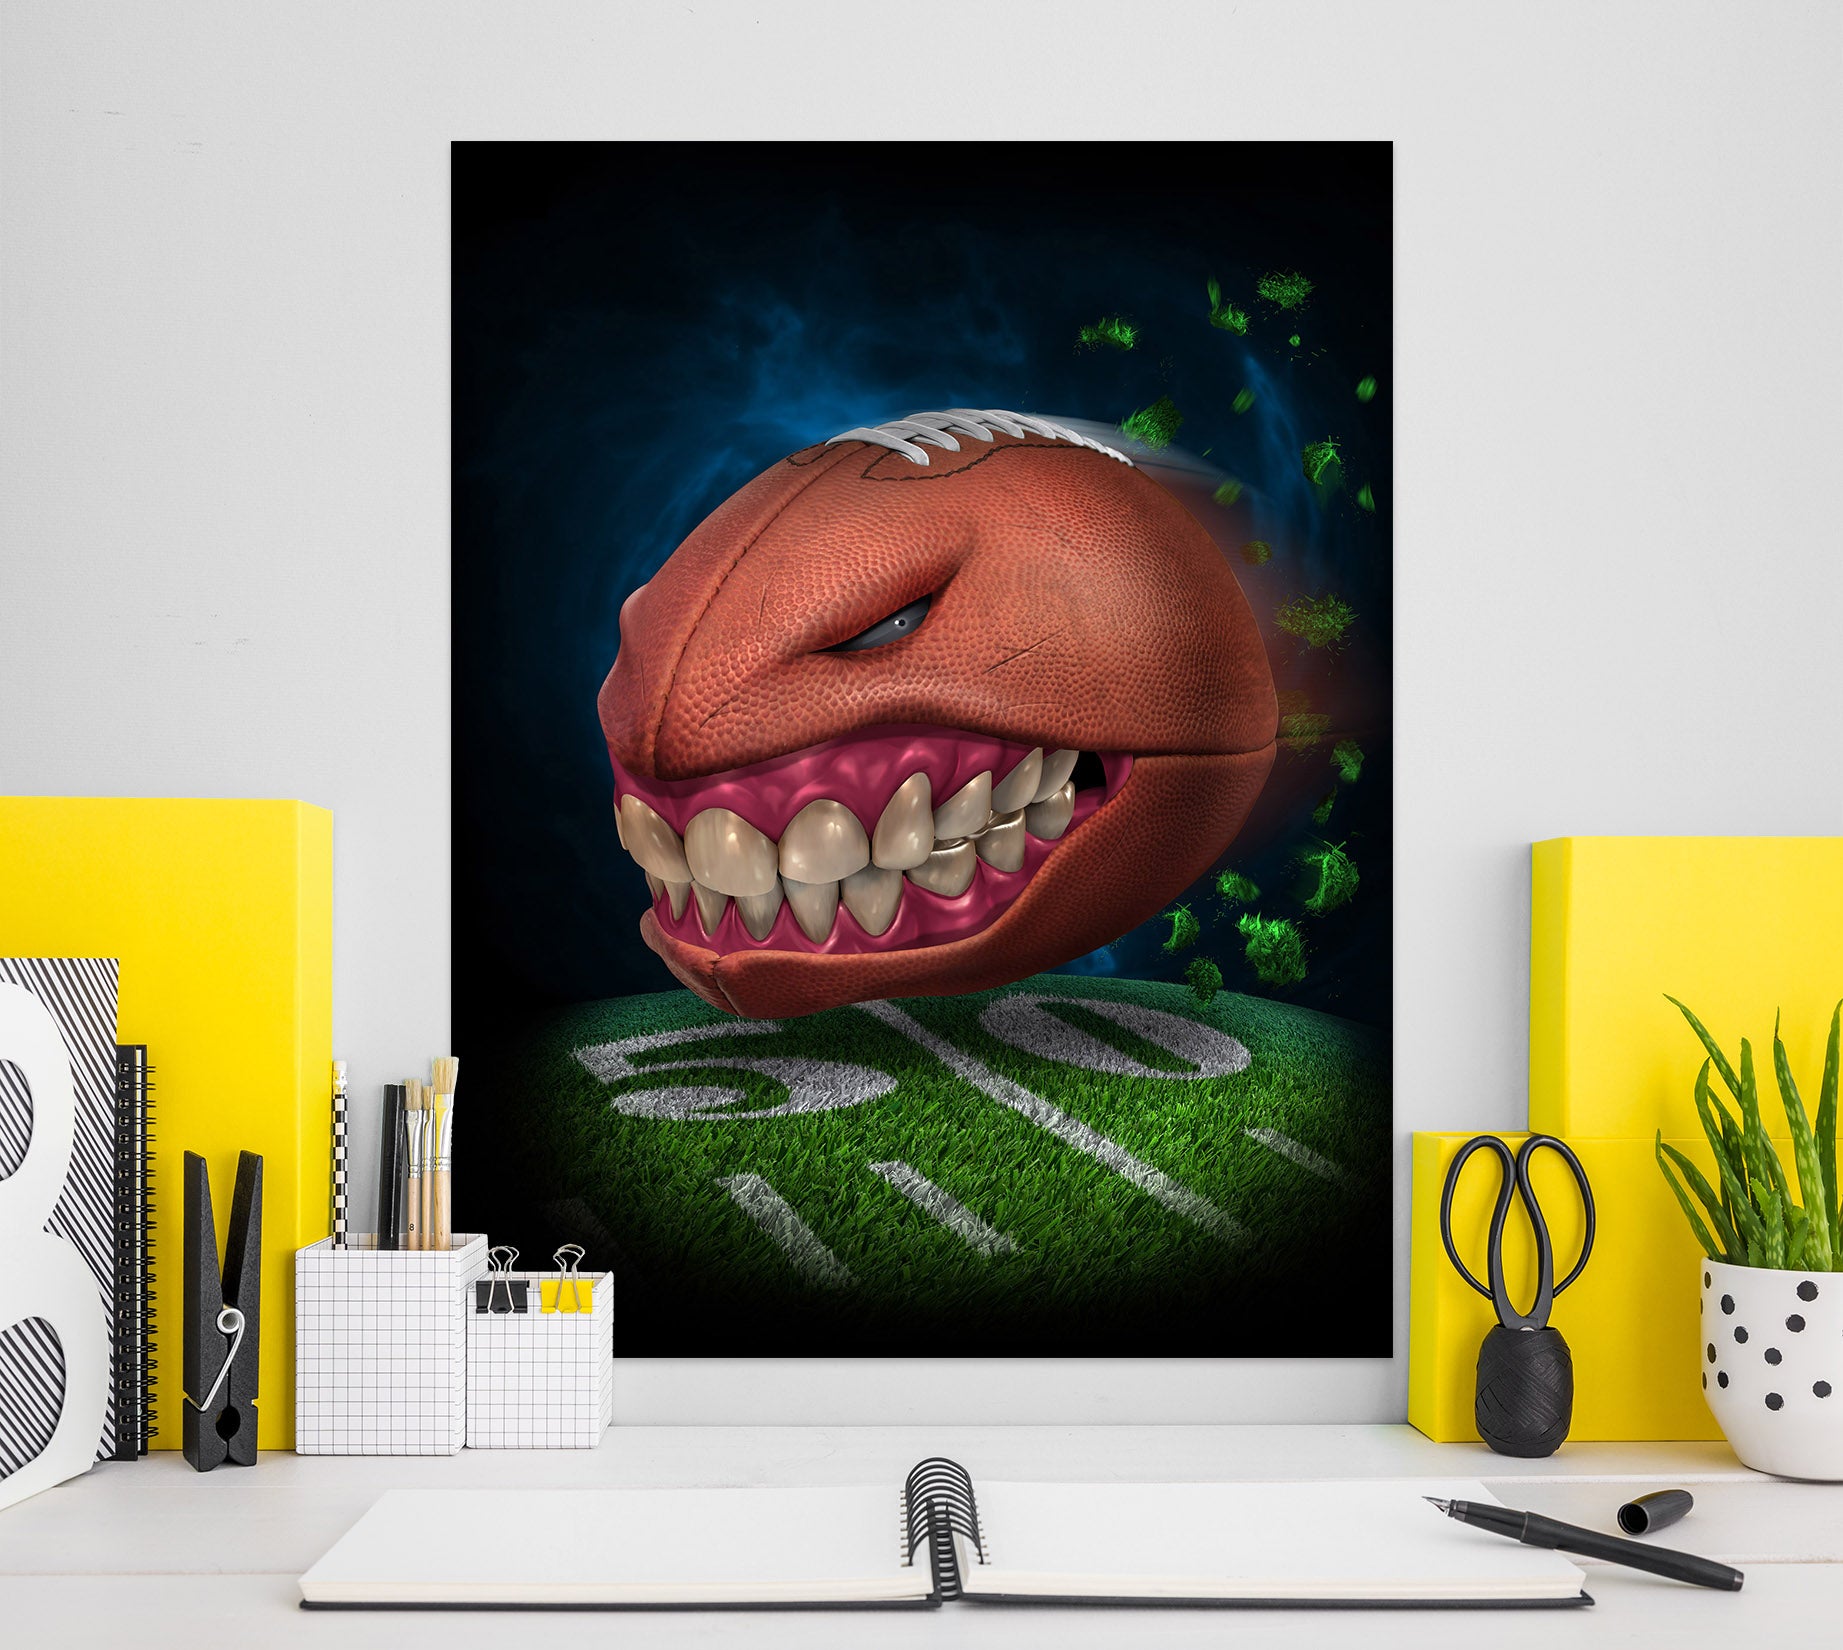 3D Teeth Football 5112 Tom Wood Wall Sticker